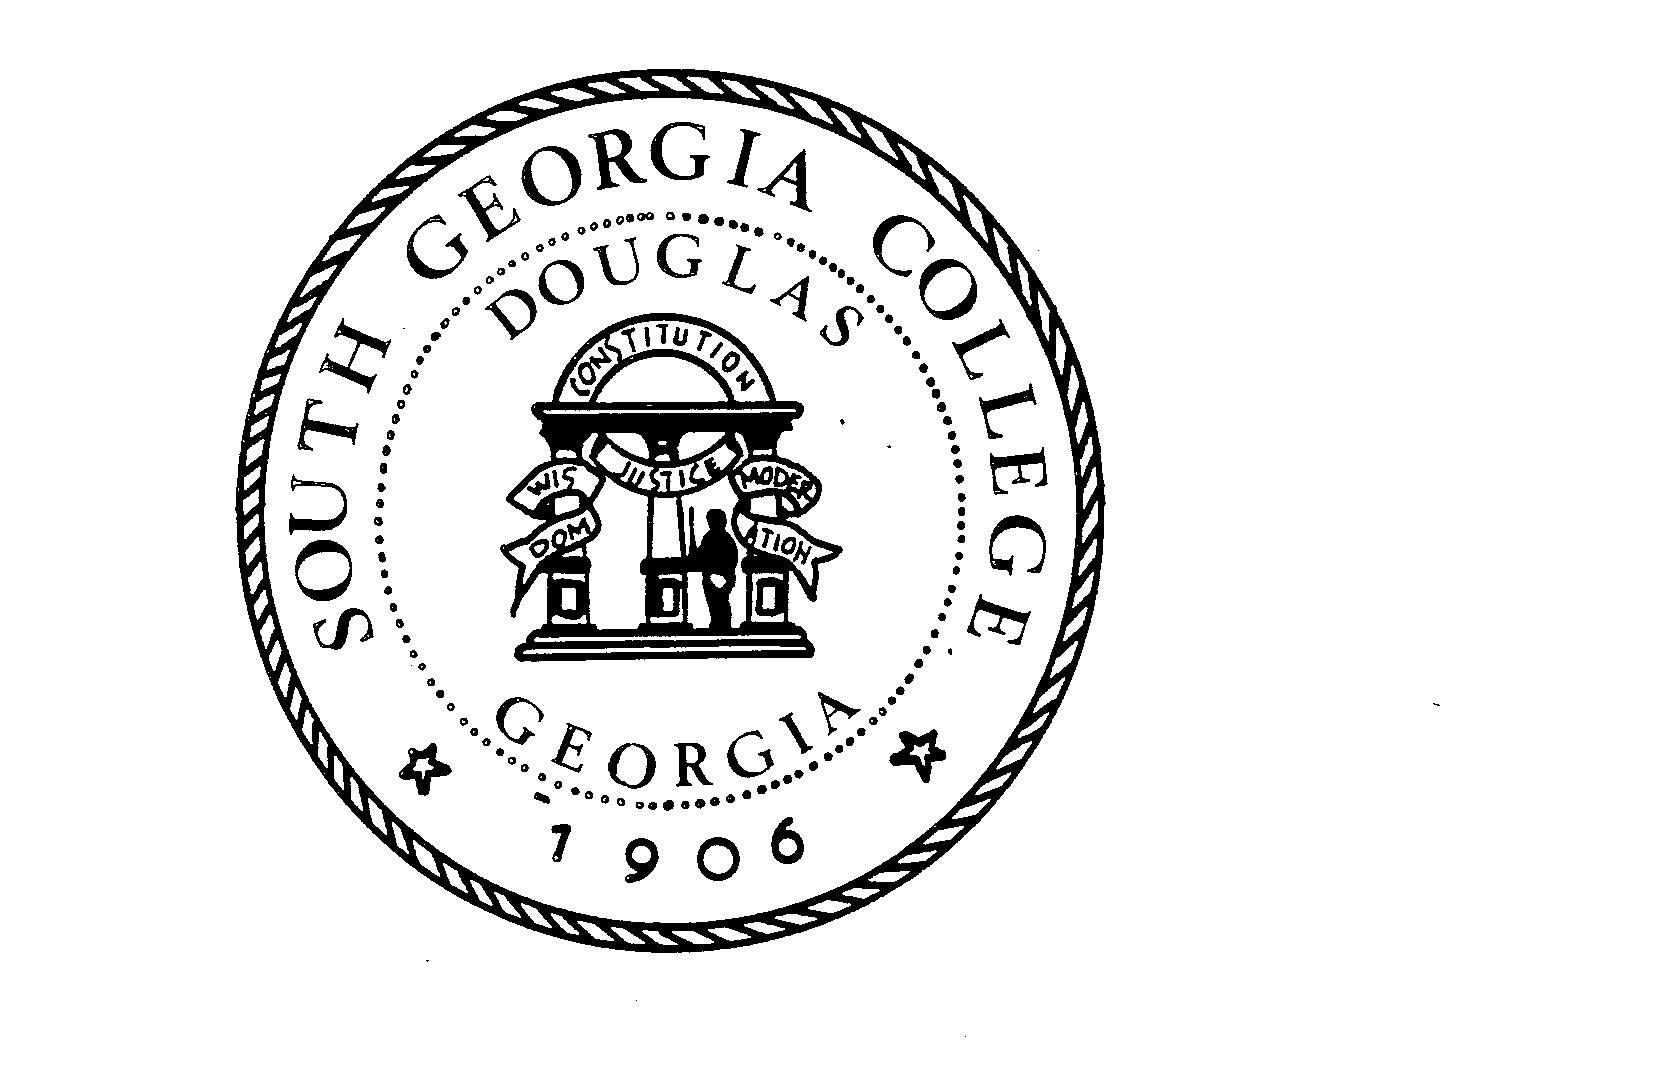  SOUTH GEORGIA COLLEGE GEORGIA 1906